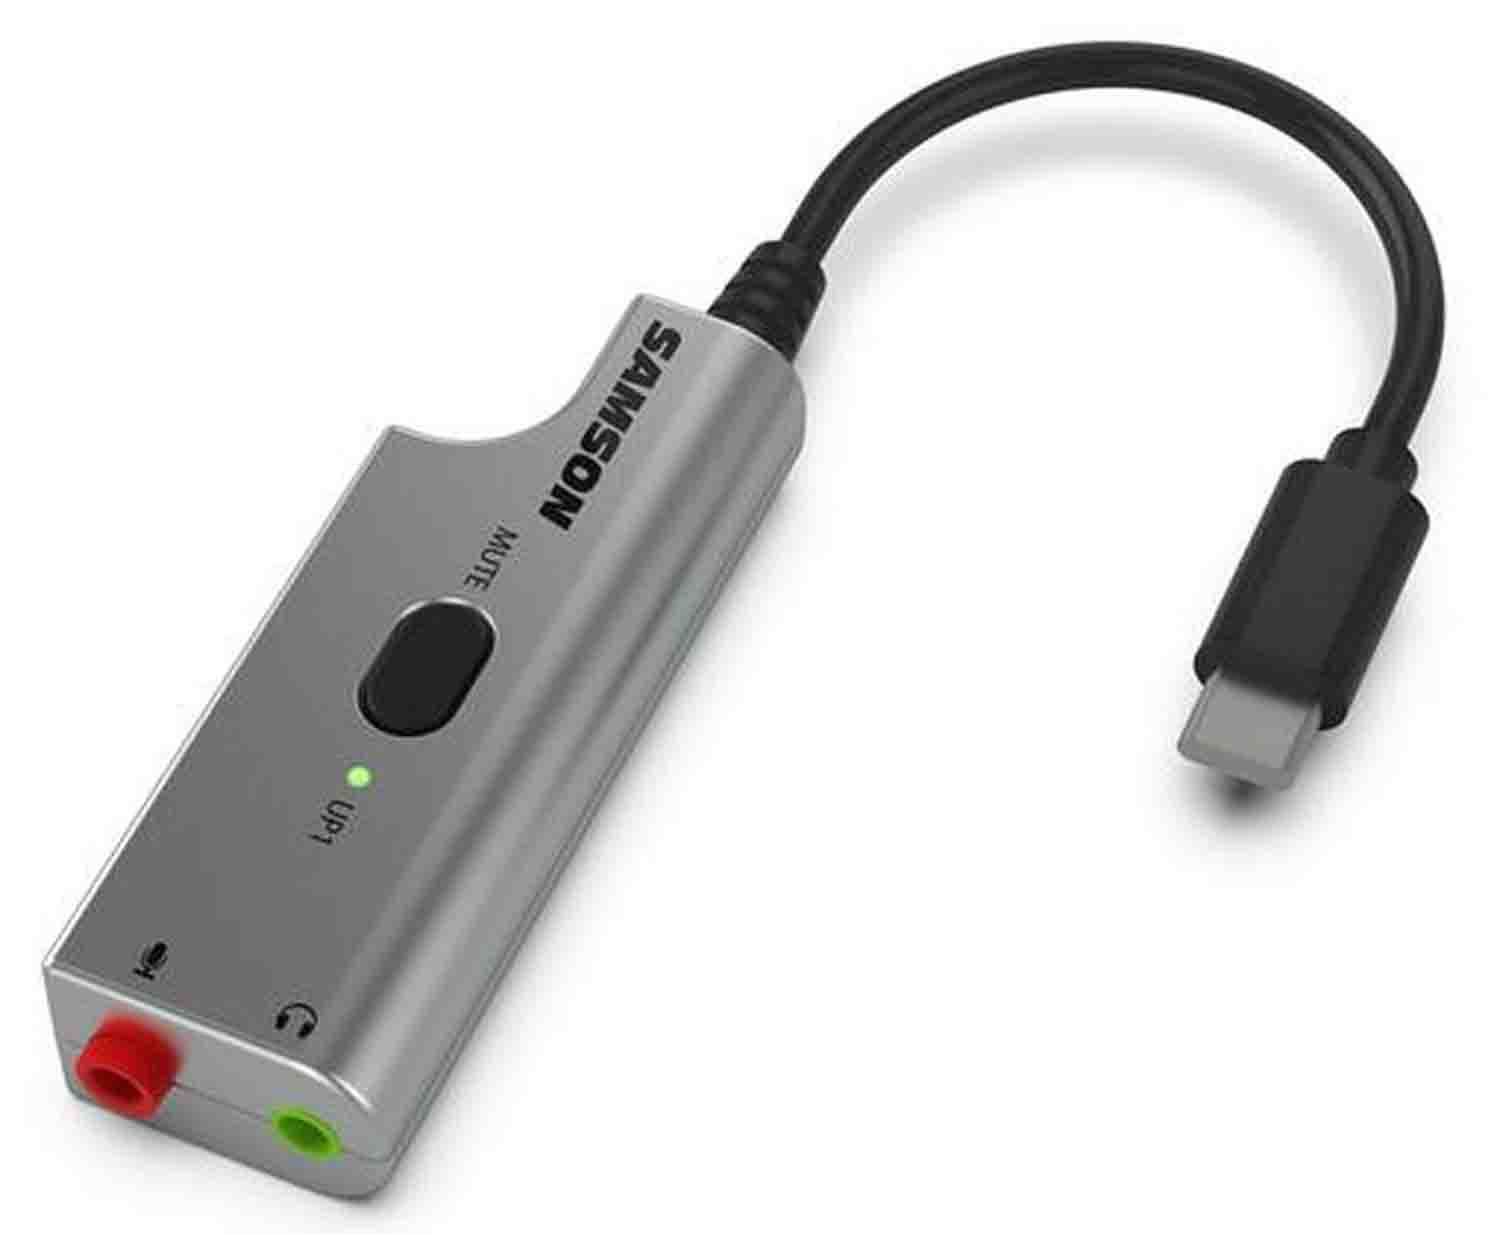 Samson SADEU1 Broadcast Headset Microphone with USB Adapter - Hollywood DJ